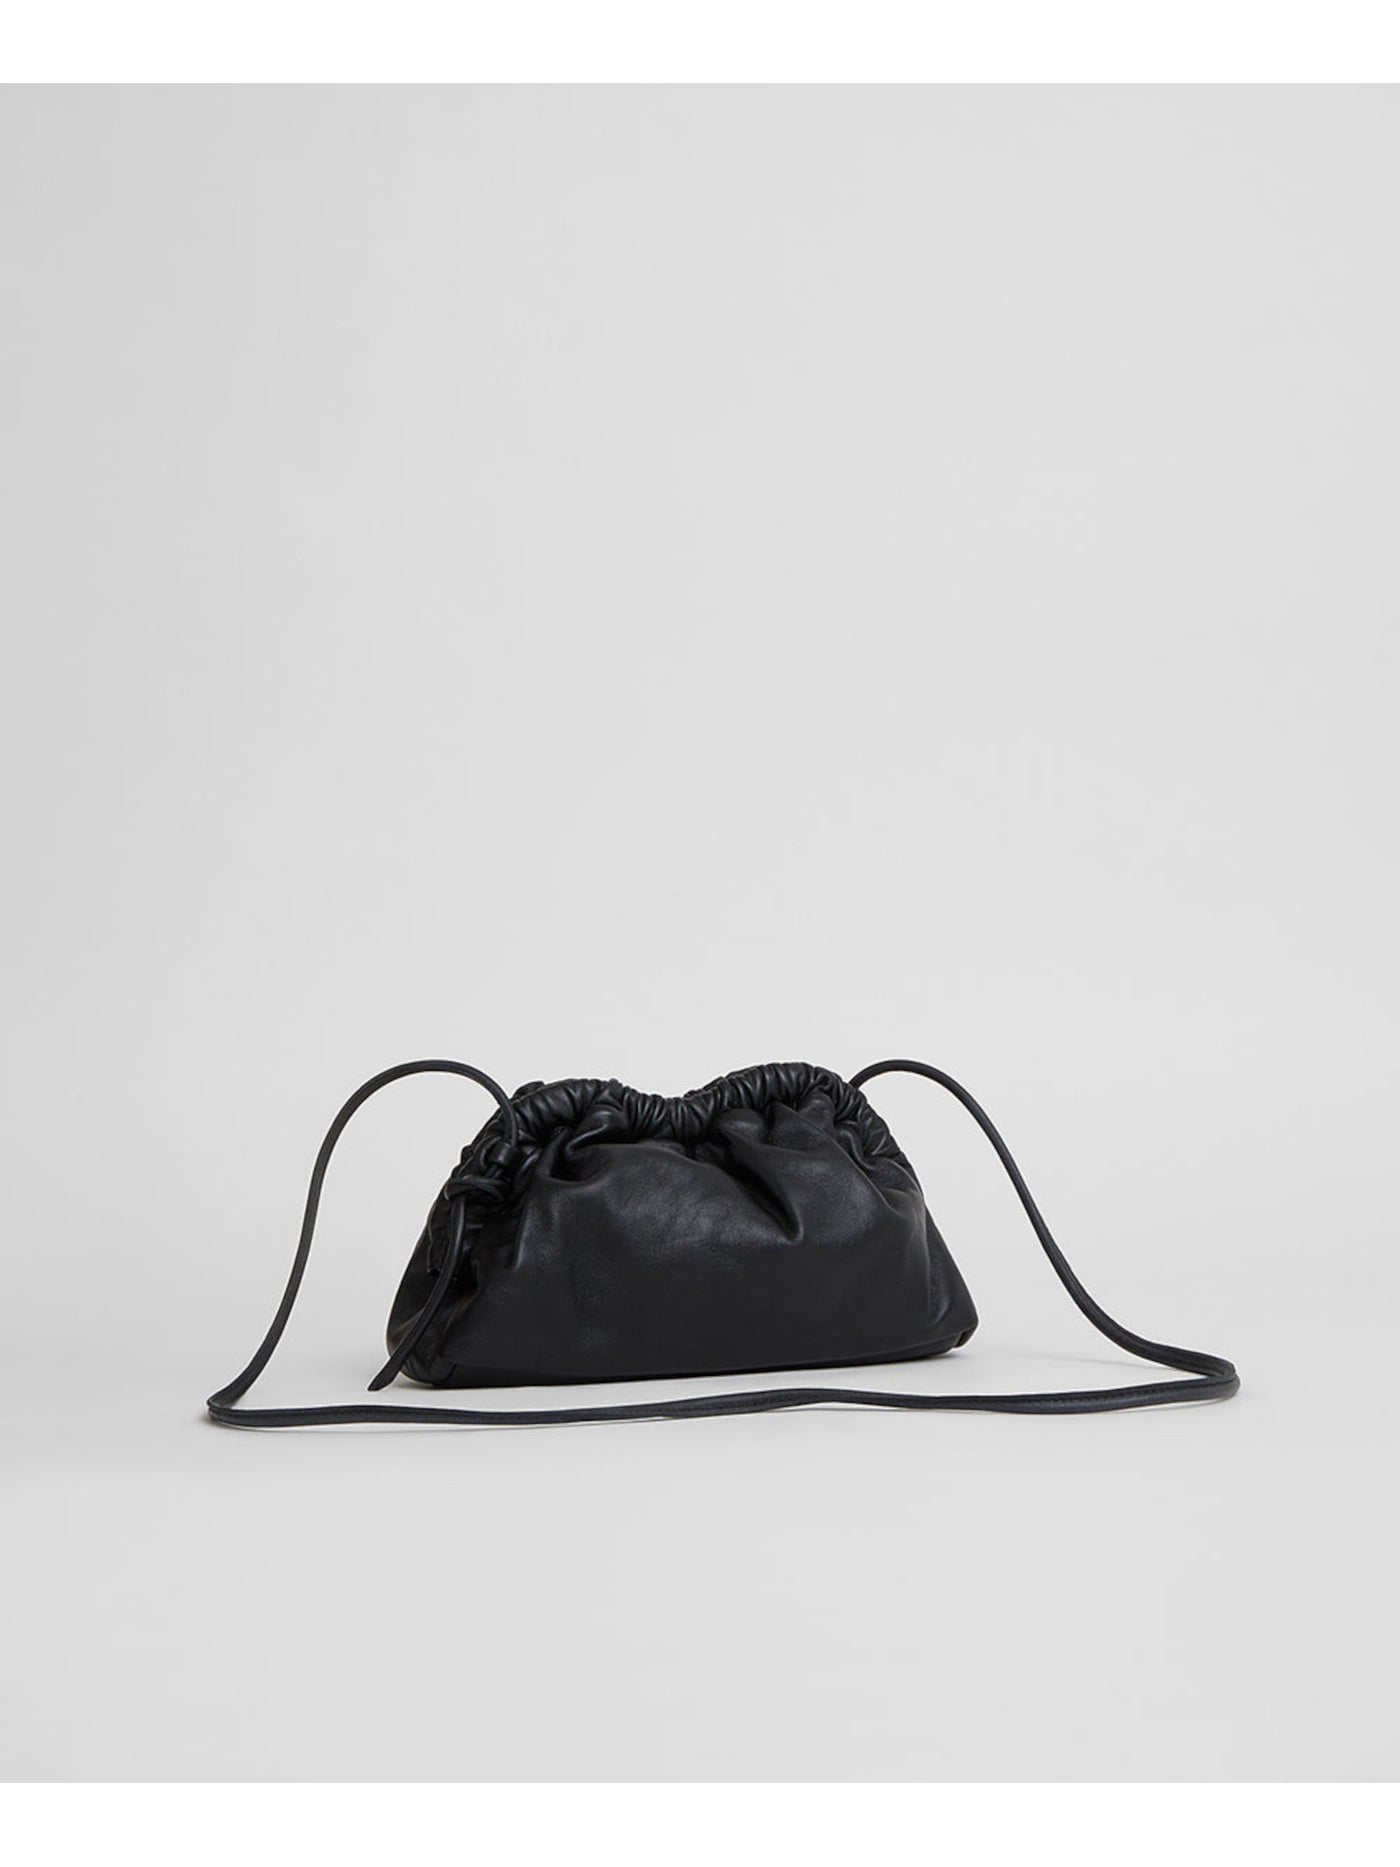 MANSUR GAVRIEL Women's Black Solid Leather Single Strap Clutch Handbag Purse